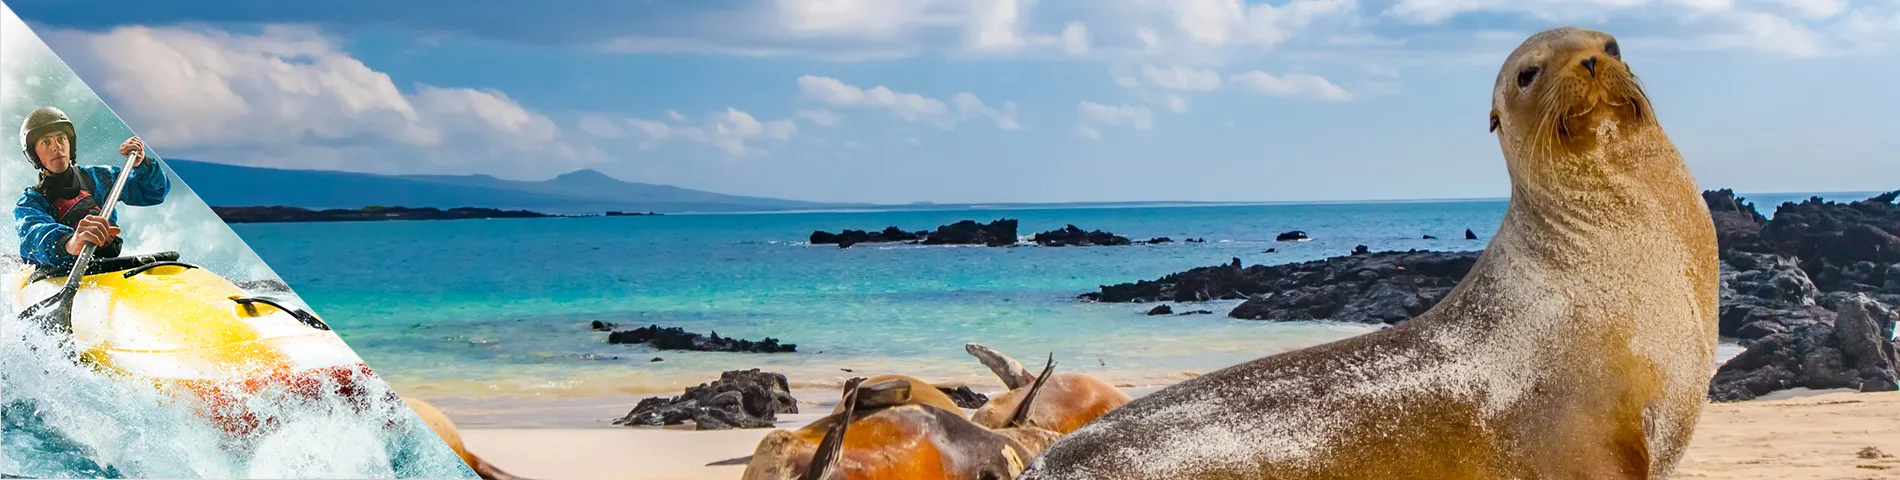 Galapagos-Inseln - Spanisch & Adventure Sport